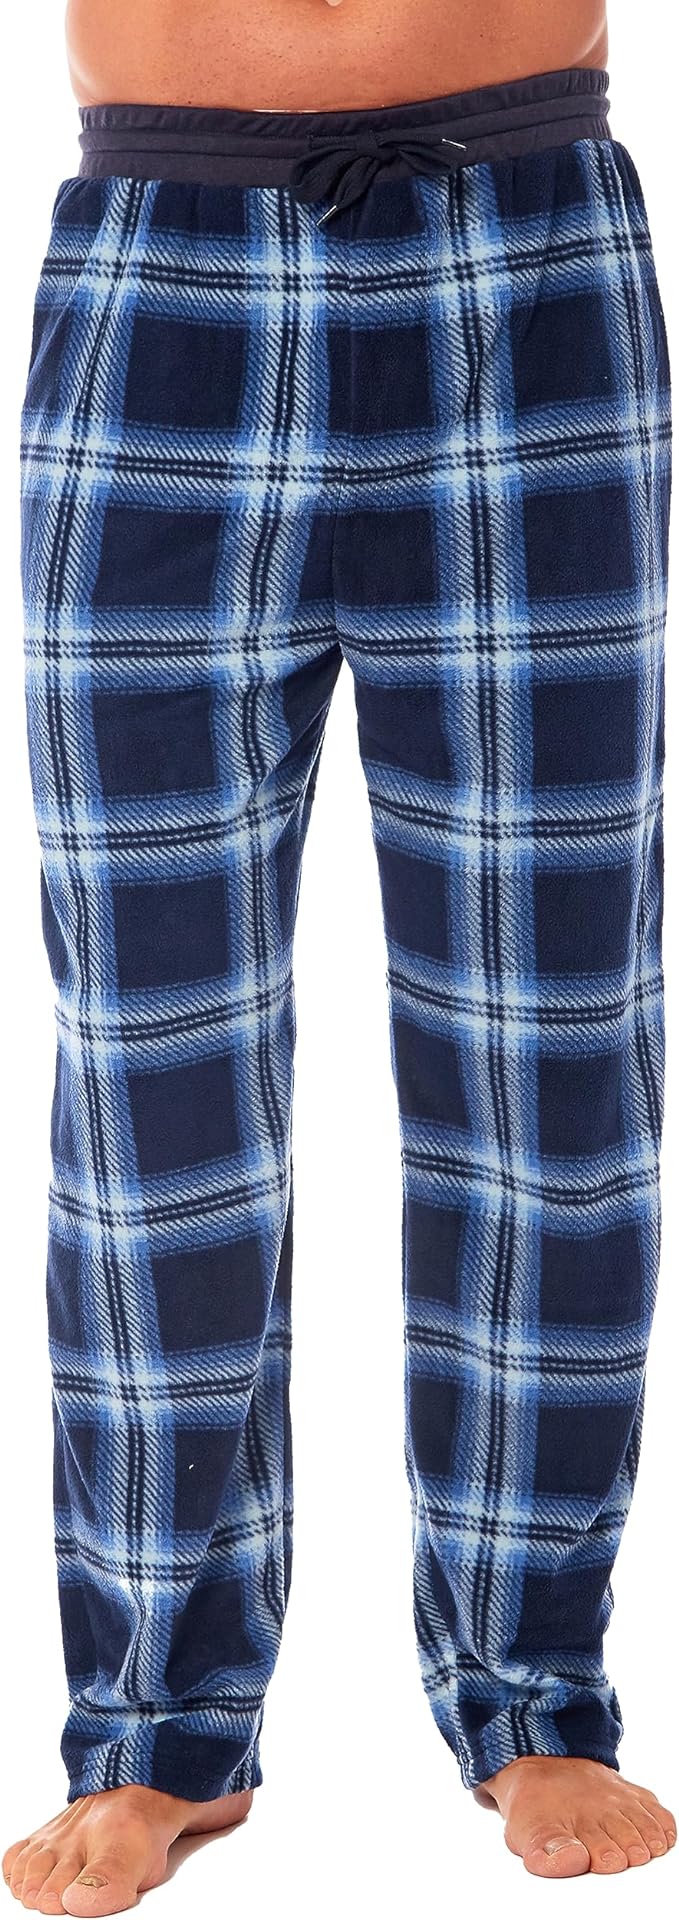 Men's Fleece Lounge Pants Super Soft PJ Sleepwear Nightwear Check Design. Buy now for £15.00. A Lounge Pant by Toro Rocco. blue, check, check designs, design, everyday wear, fleece, grey, large, Lounge, loungewear, medium, Men, mens, navy, nightwear, pant